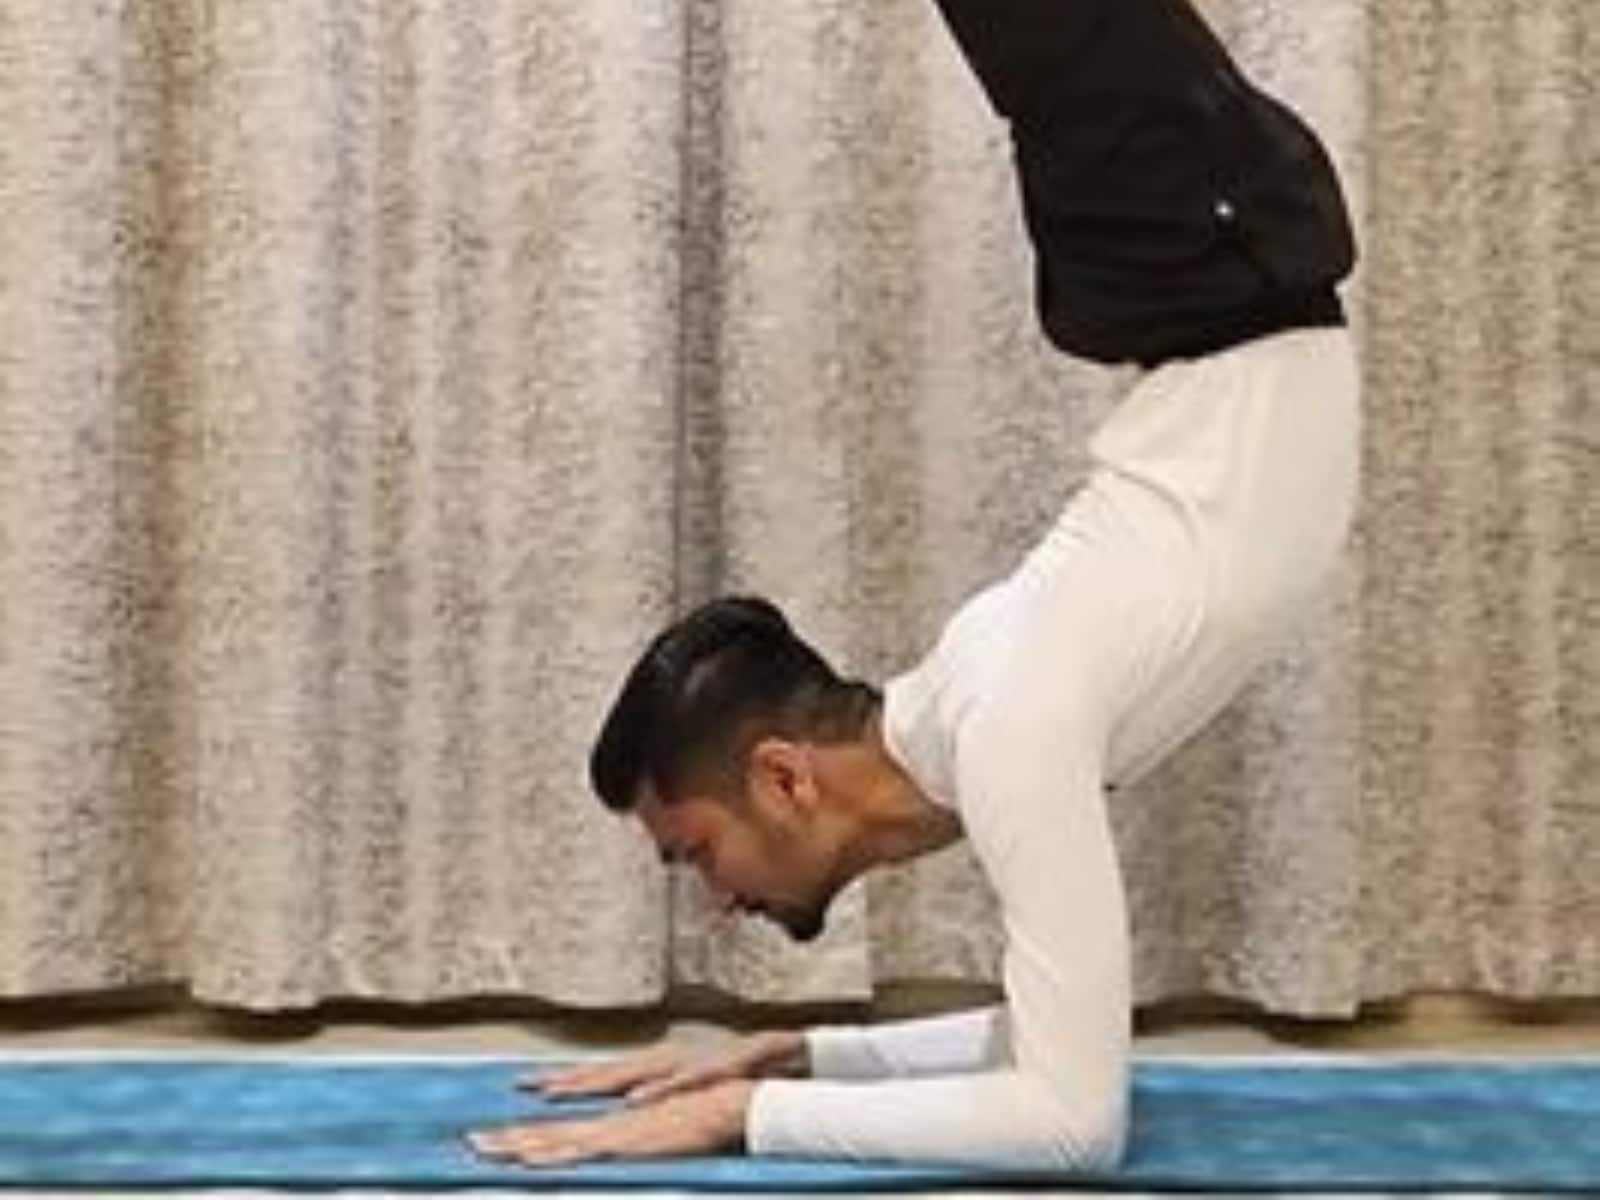 Vrschikasana (Scorpion Pose) | Iyengar yoga, Yoga for flexibility, Poses